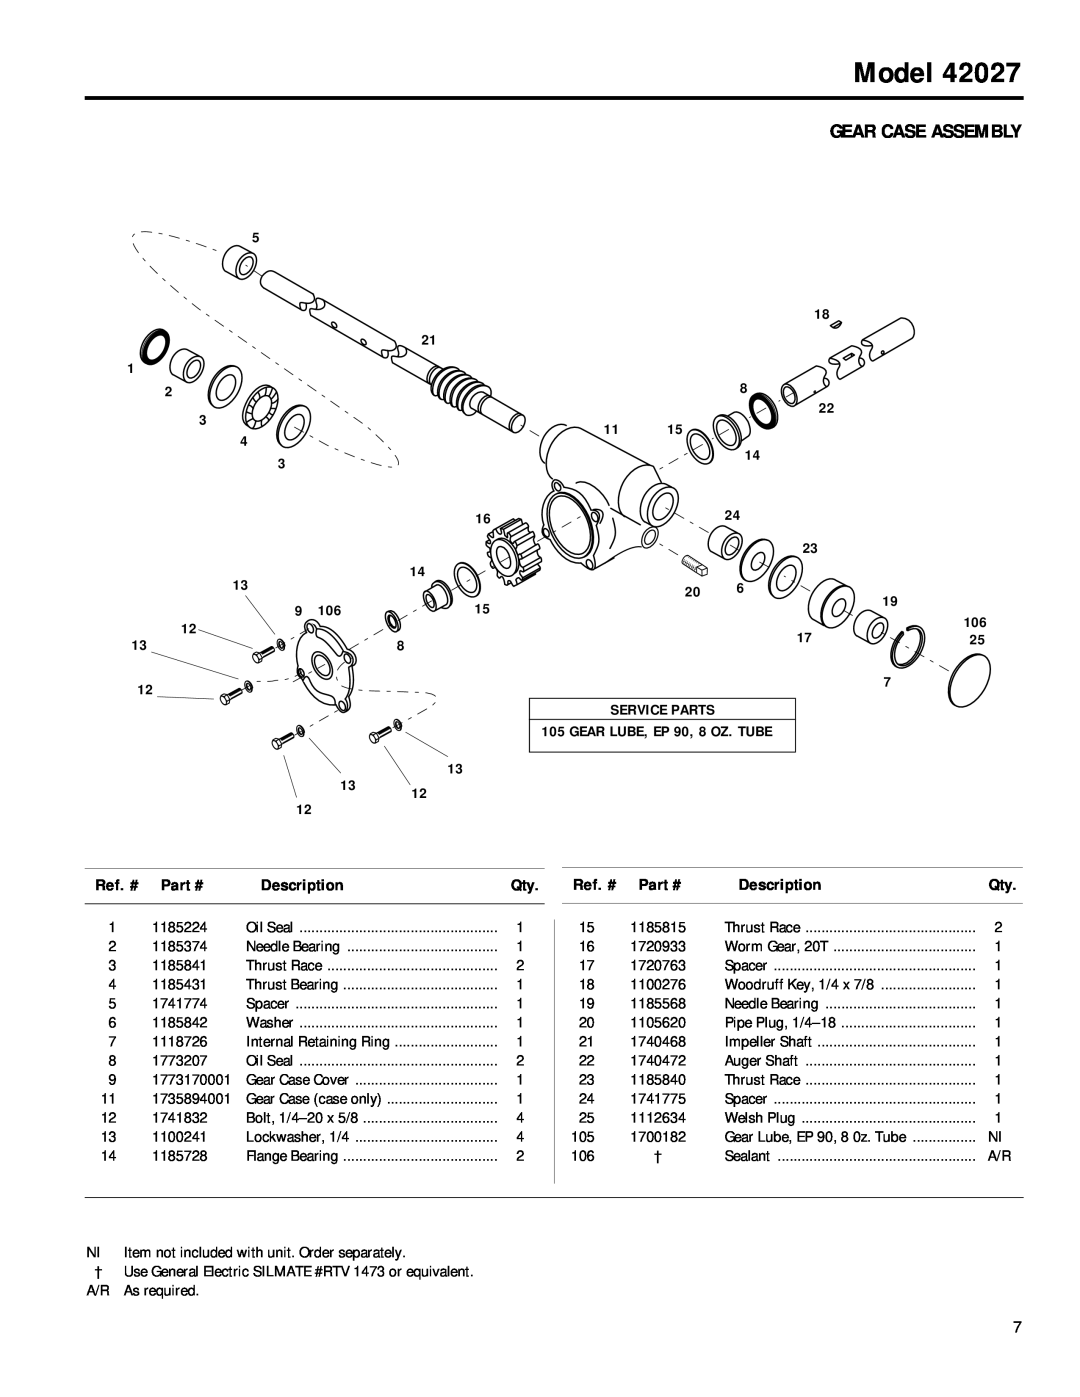 Troy-Bilt 42027 manual Gear Case Assembly, Model, Ref. #, Description, Service Parts, GEAR LUBE, EP 90, 8 OZ. TUBE 